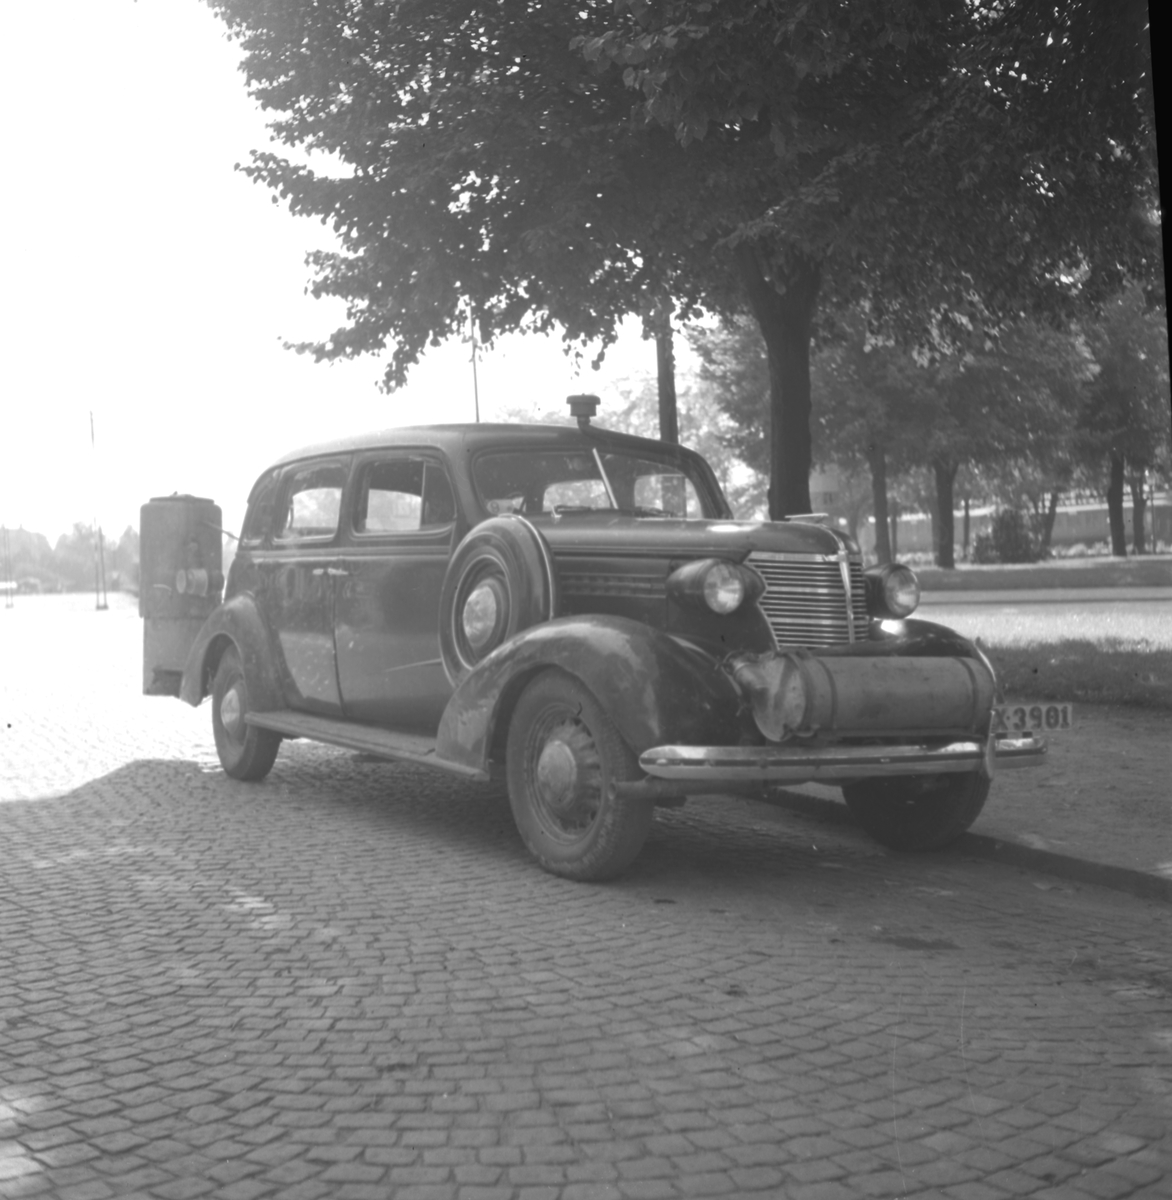 Fylgia försäkring. Bil X 3901. Den 11 september 1945.
X3901 Chevrolet 1938. Åkare Johan Gunnar Palm Norrsundet.